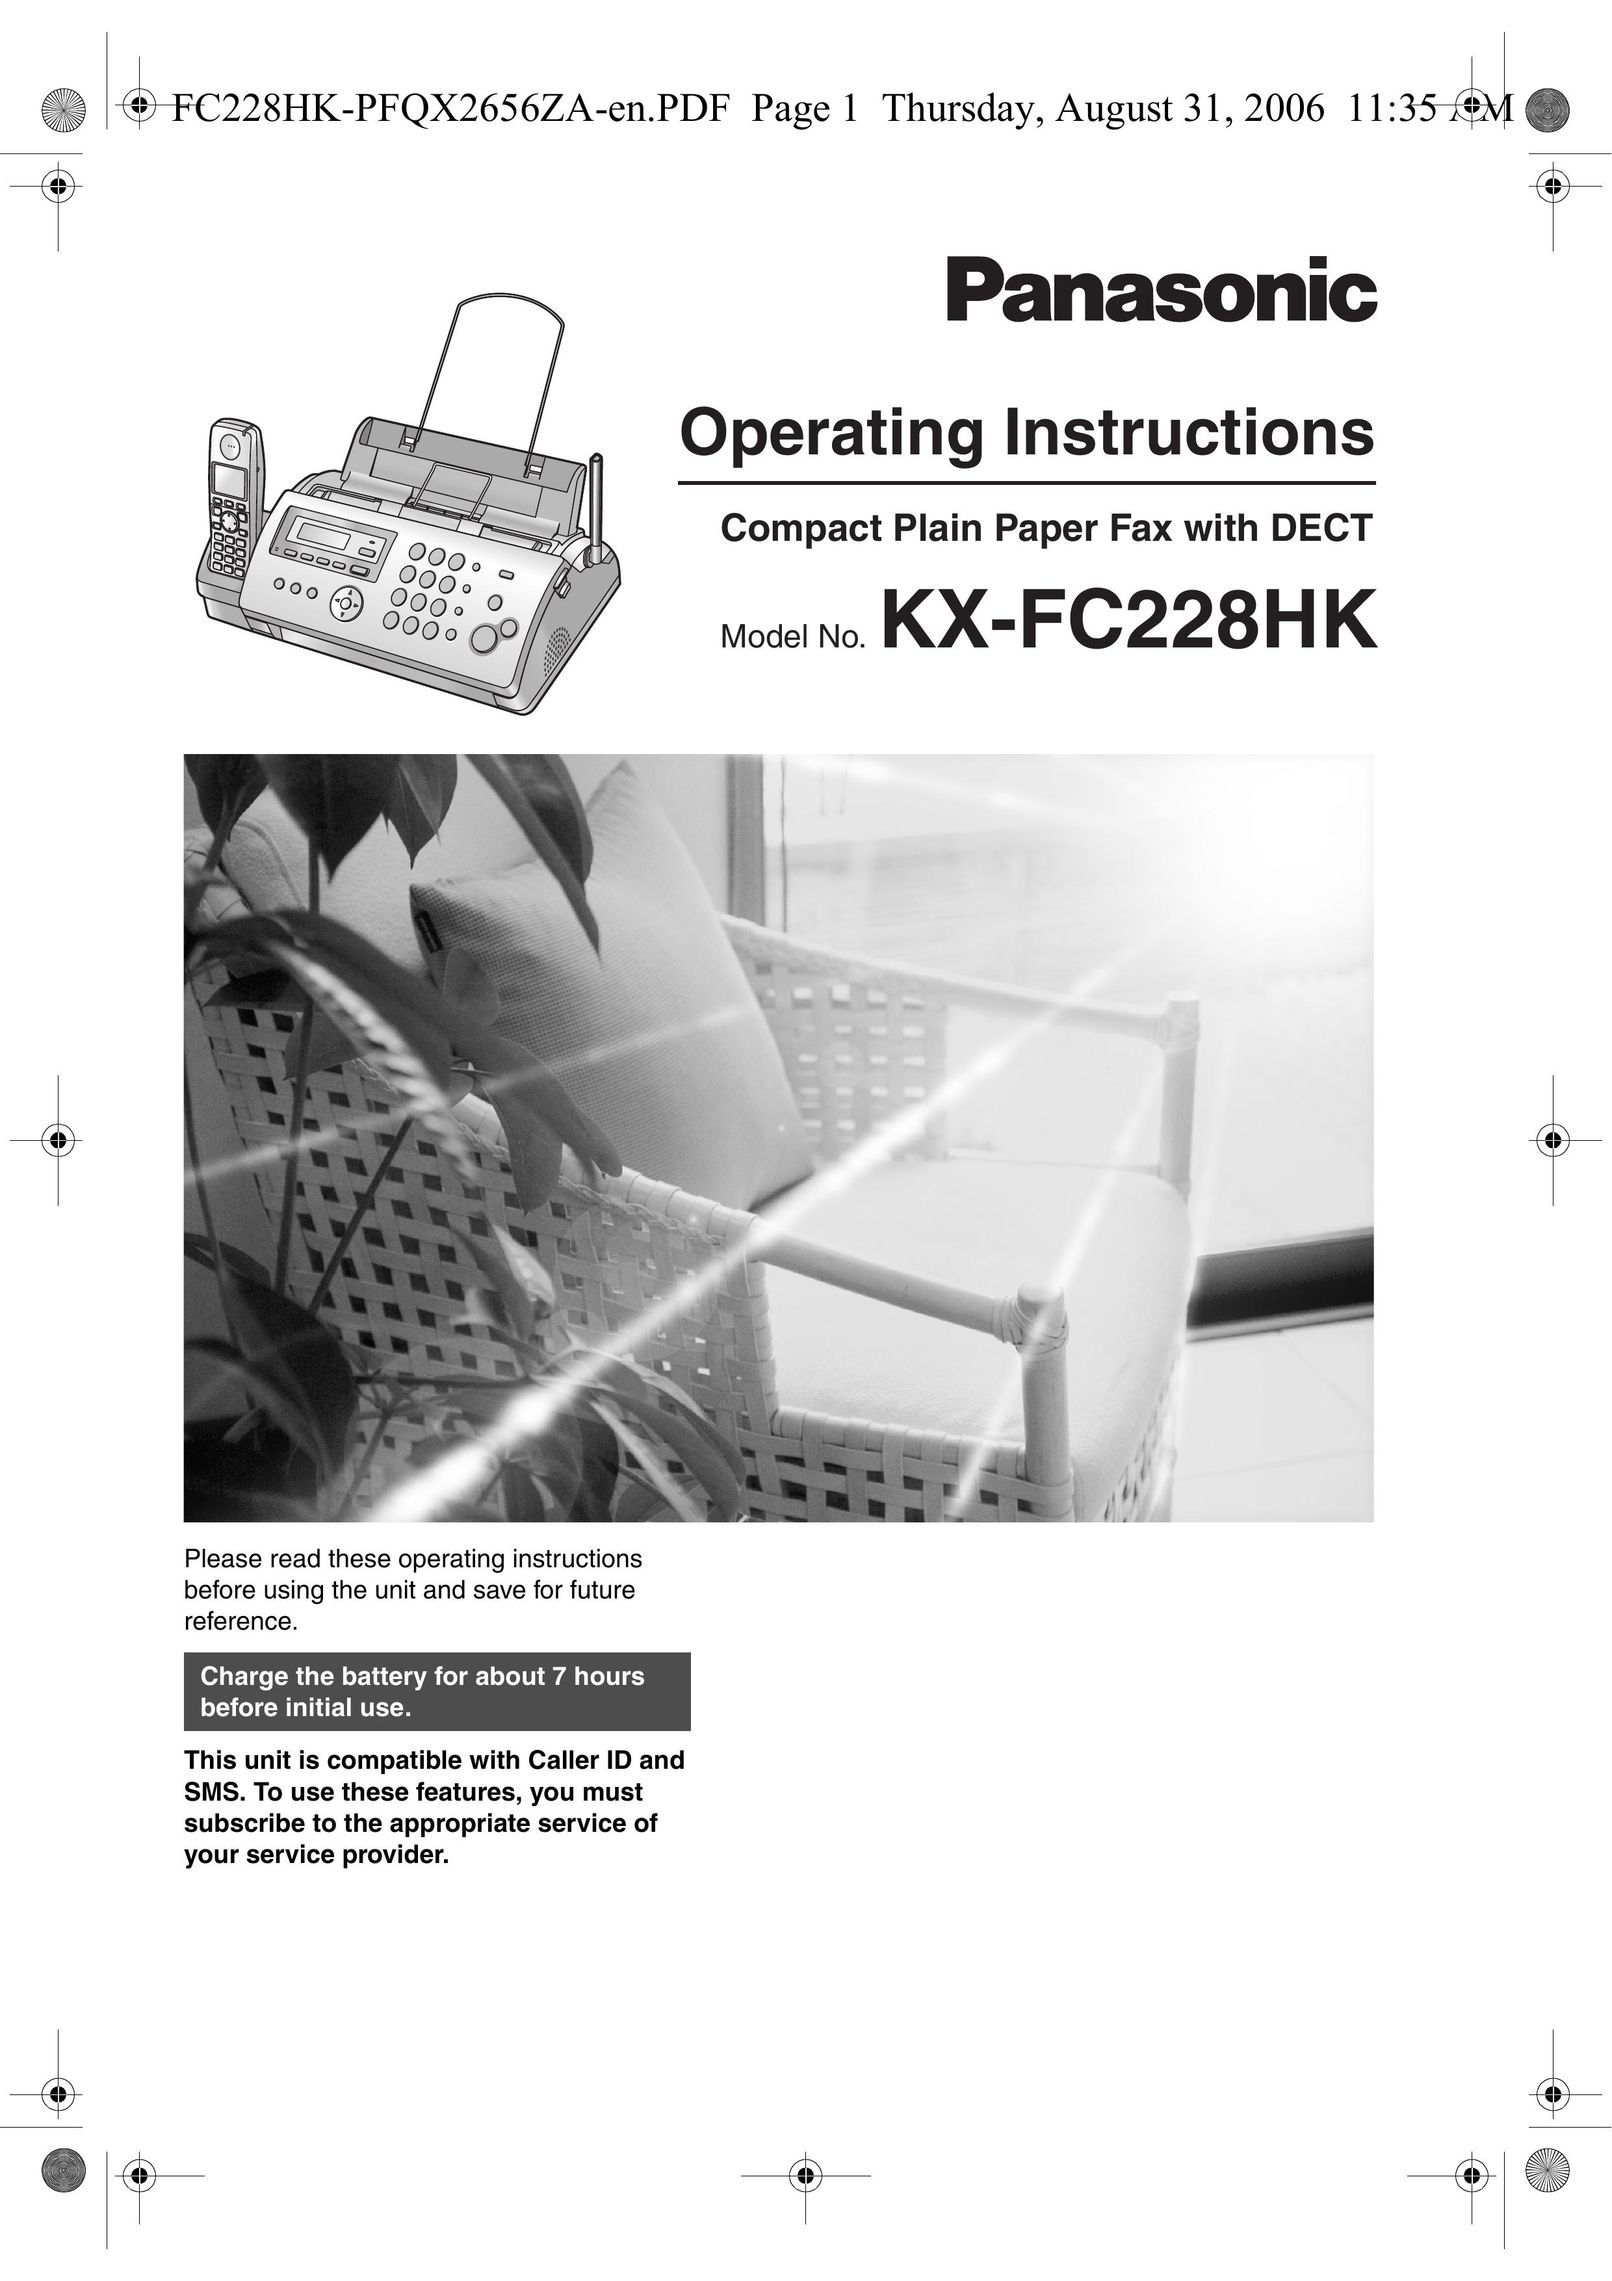 Panasonic KX-FC228HK Fax Machine User Manual